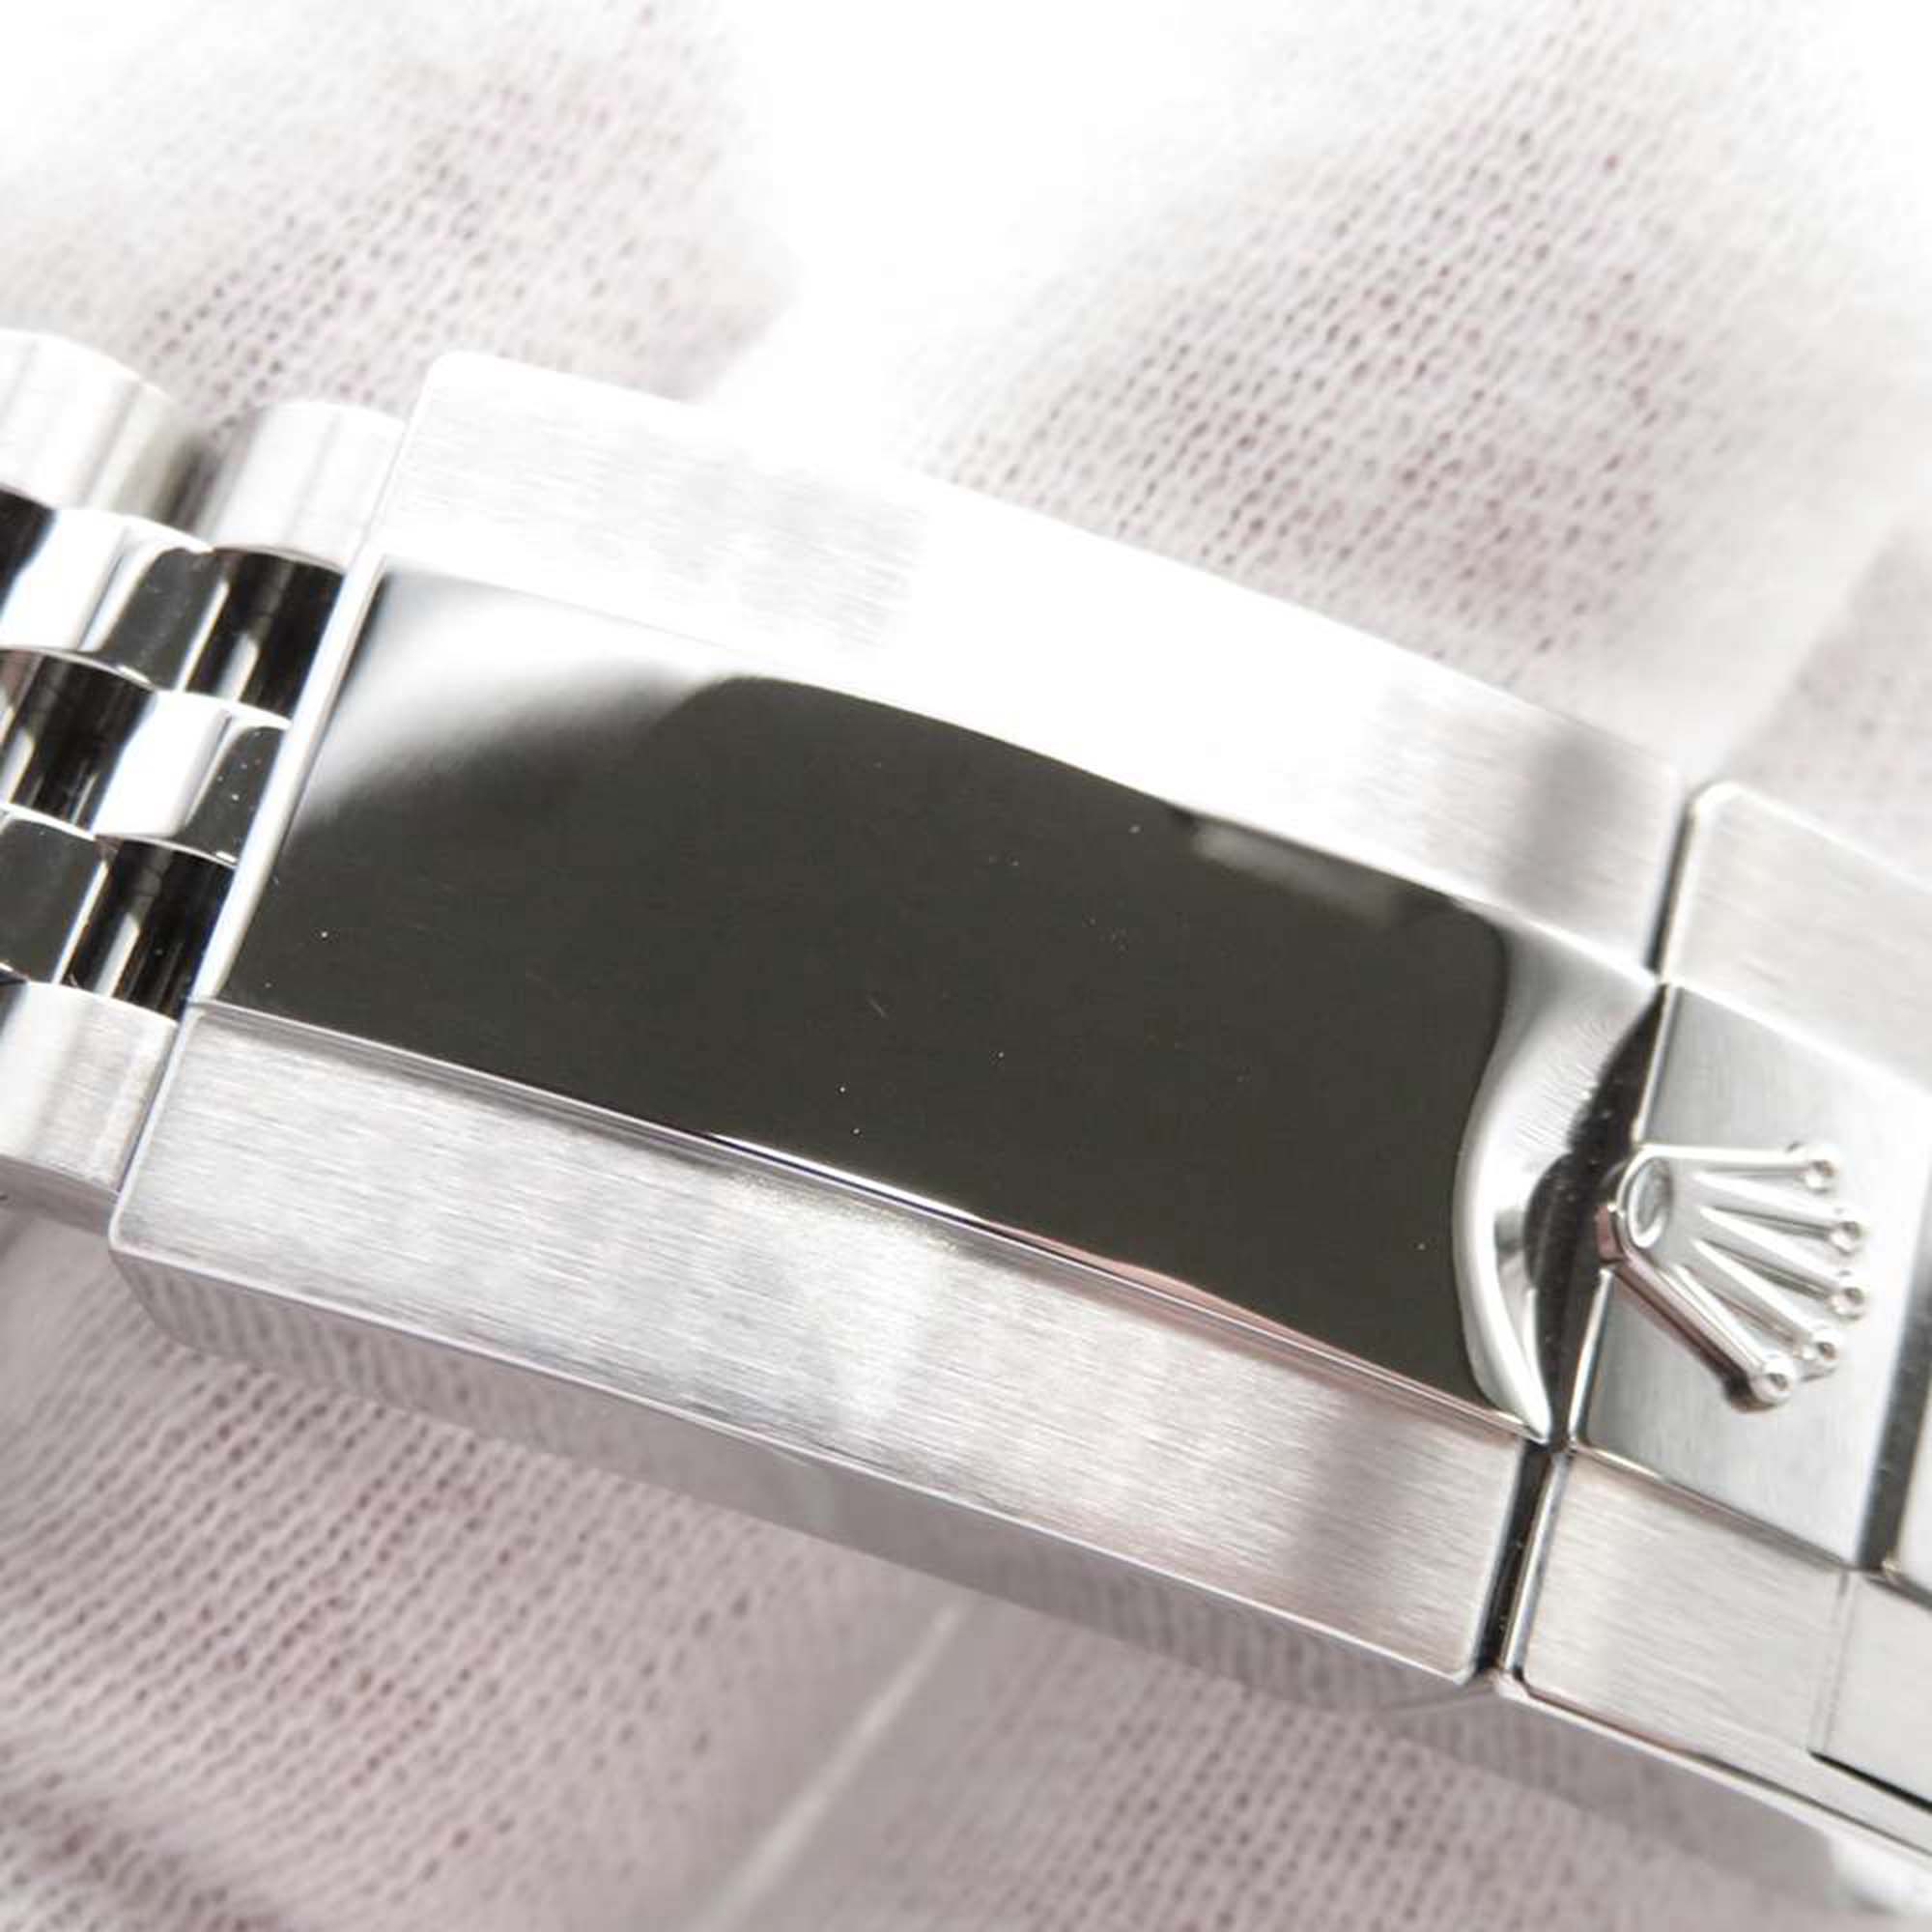 Rolex Black Stainless Steel GMT-Master II 126720VTNR Automatic Men's Wristwatch 40 Mm